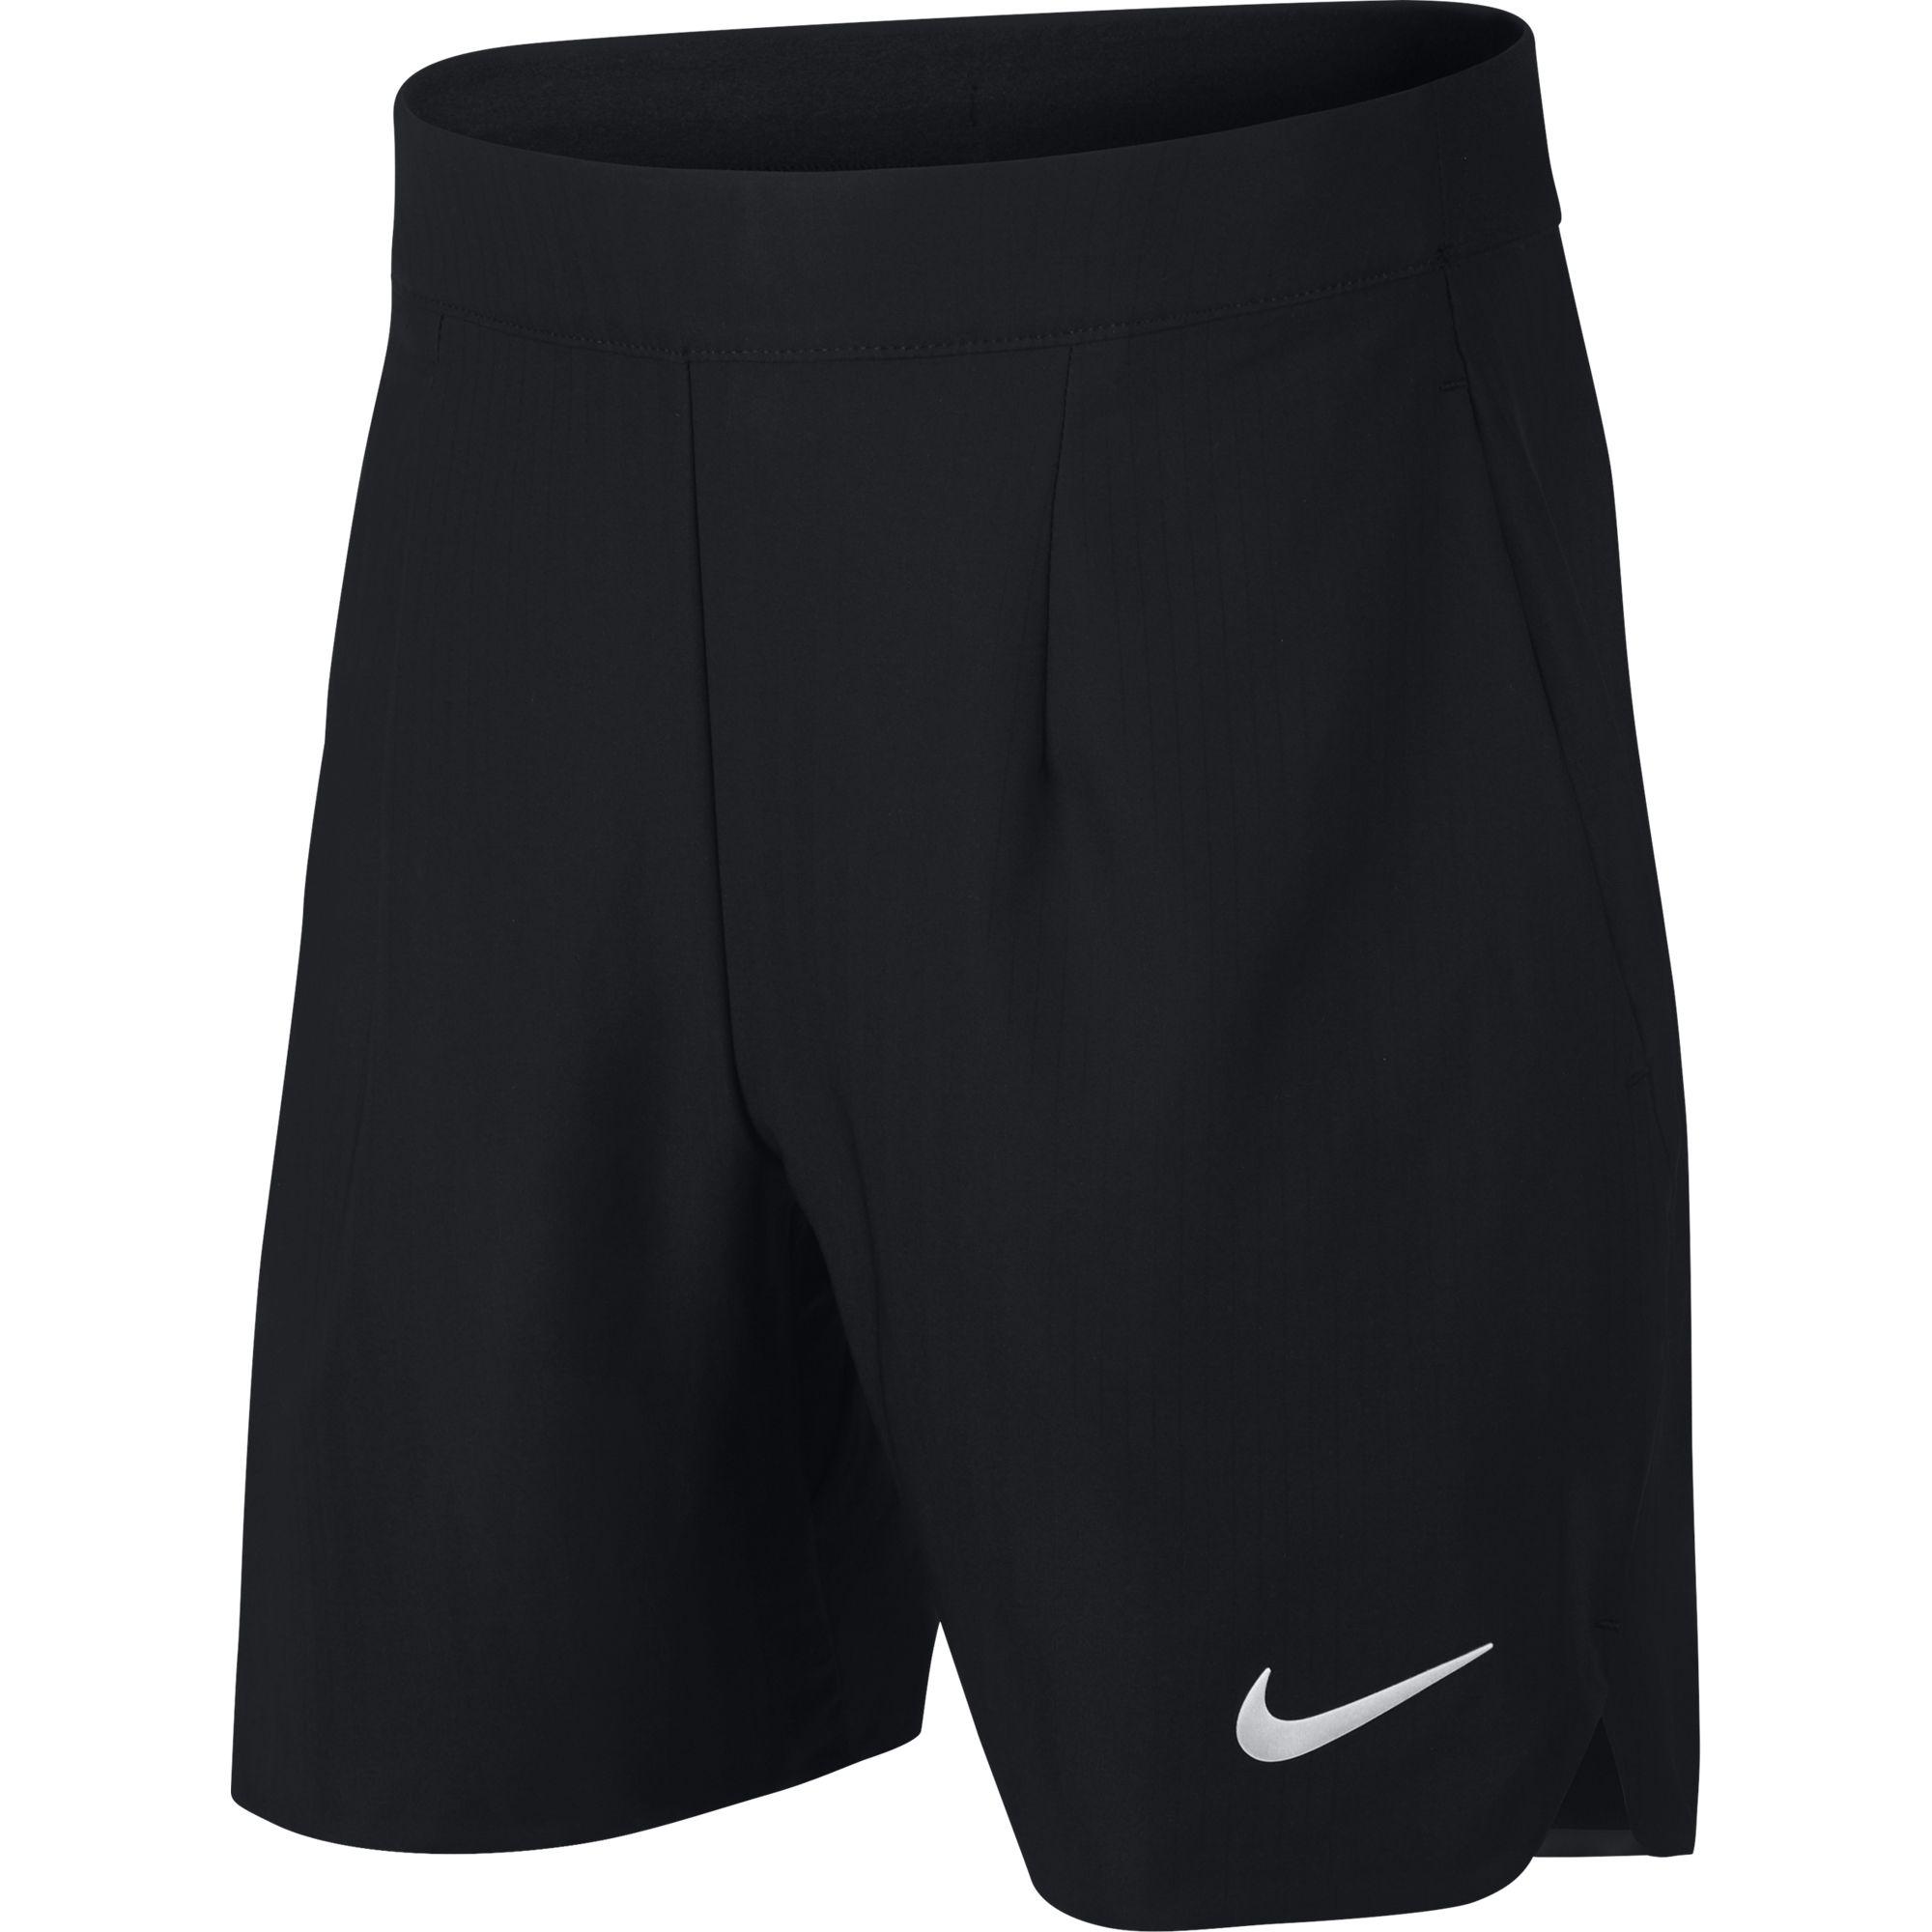 Nike Boys Court Ace Shorts - Black/White - Tennisnuts.com